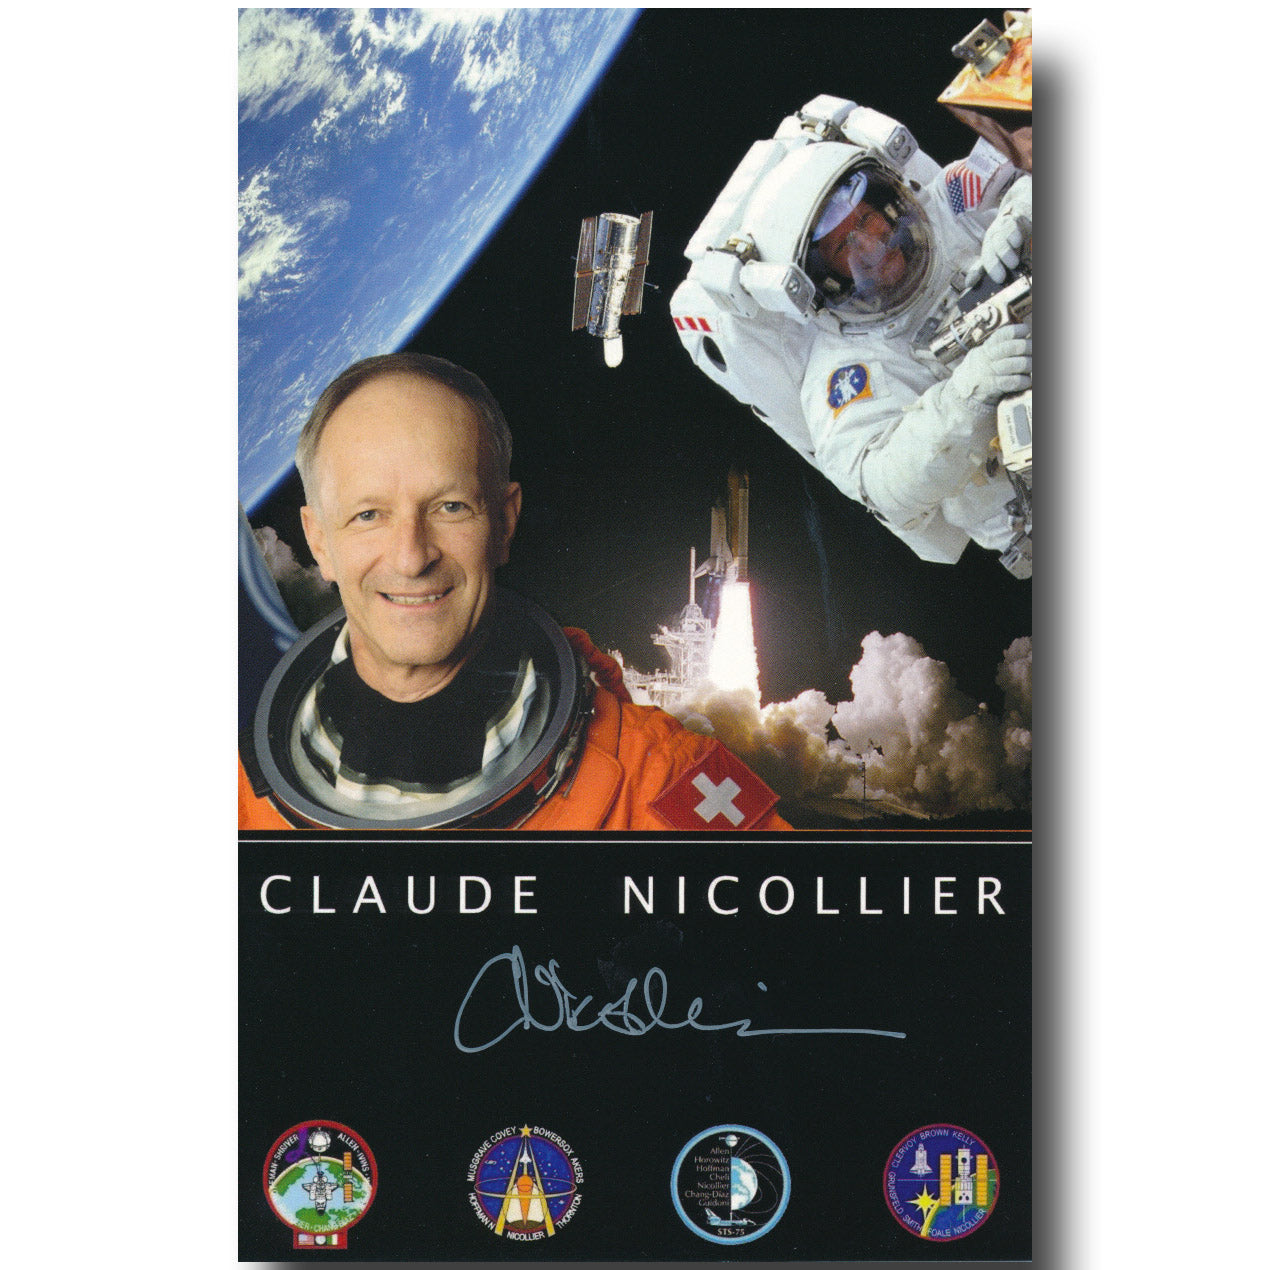 Claude Nicollier – promotional card